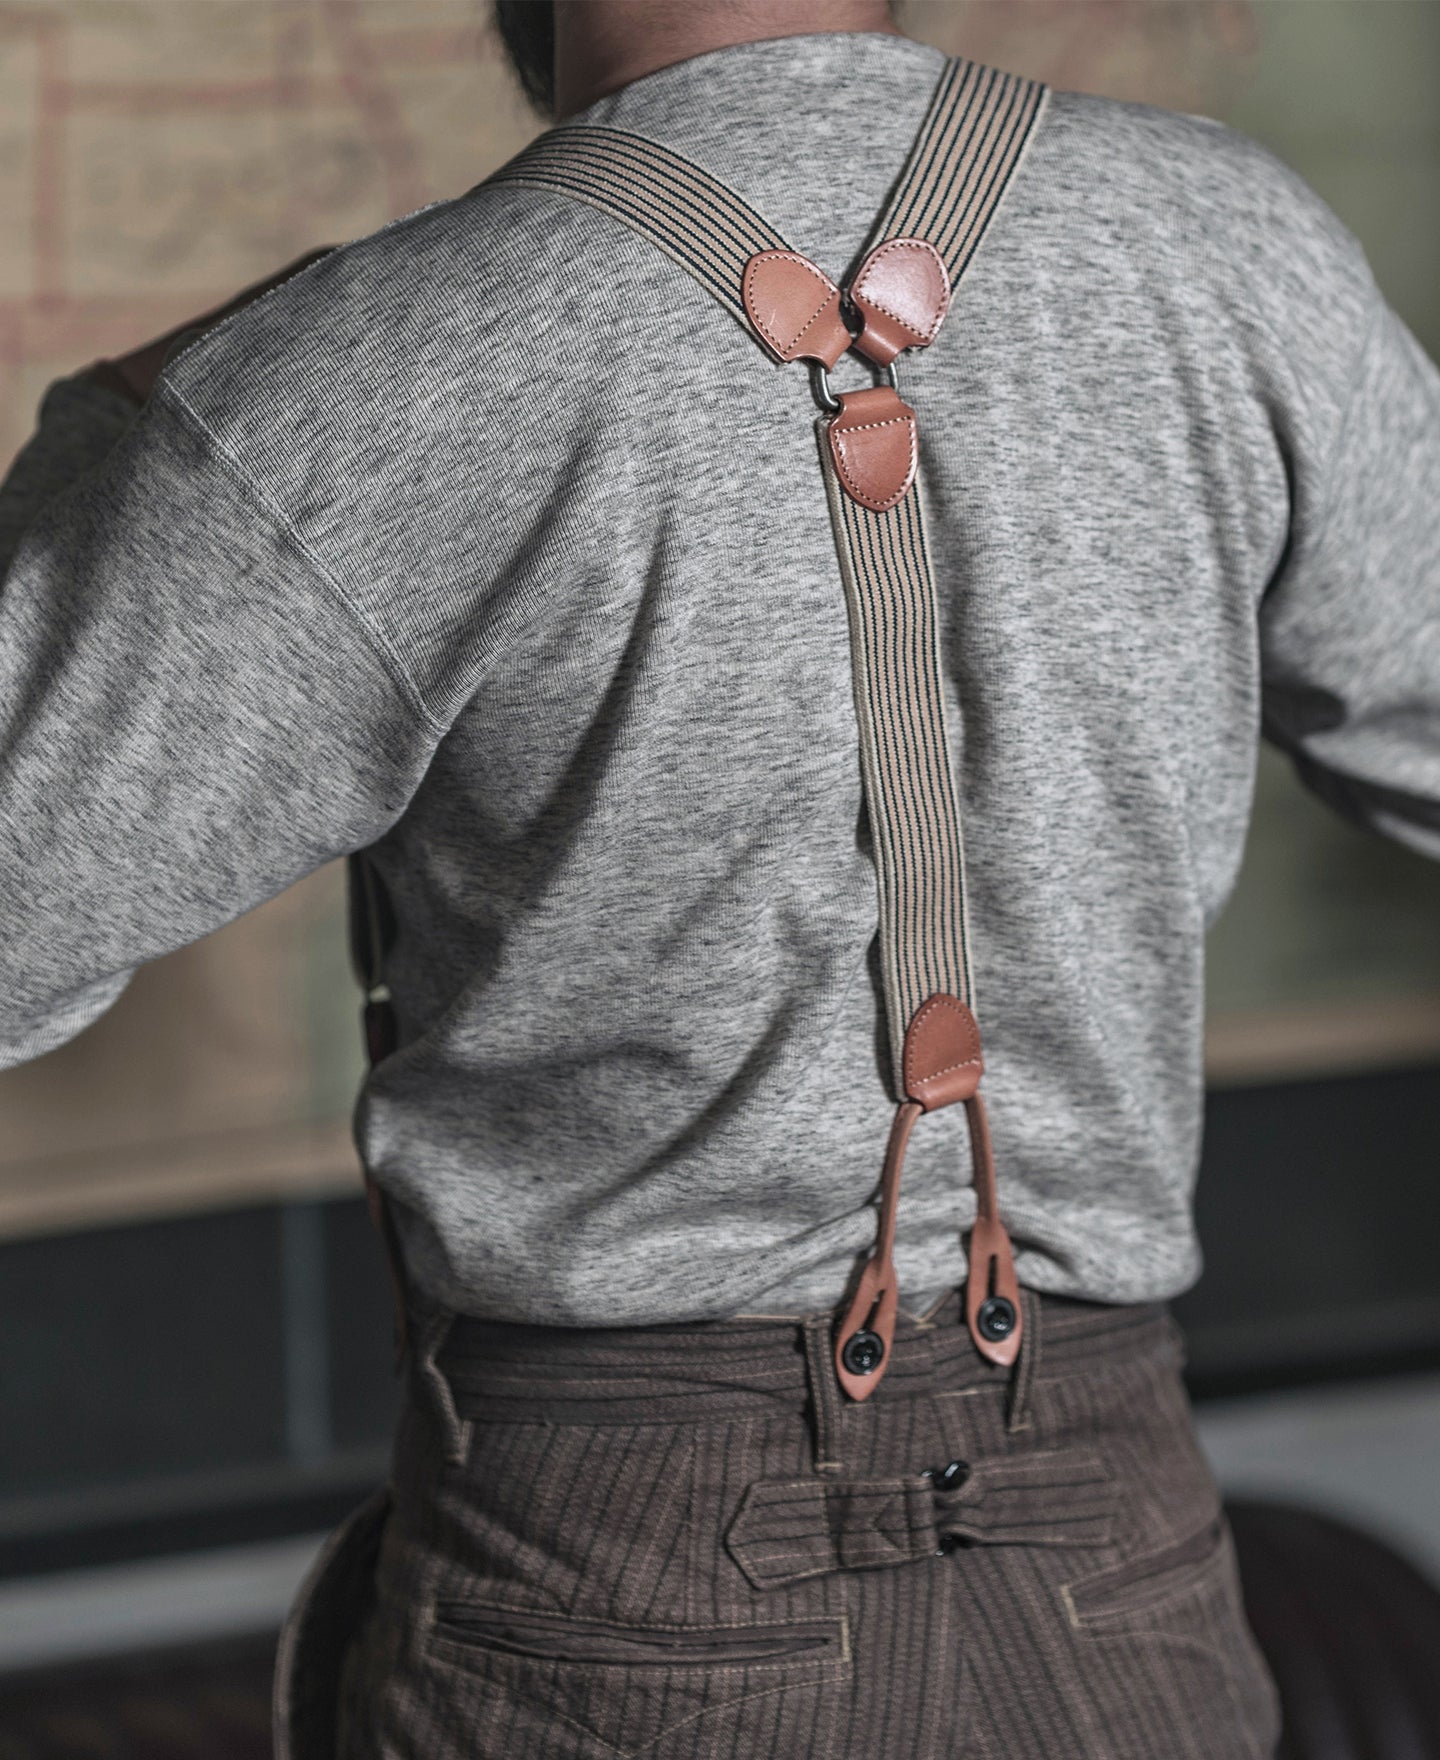 Old-Time Men's Y-Back Leather Button Suspender Braces - Blue